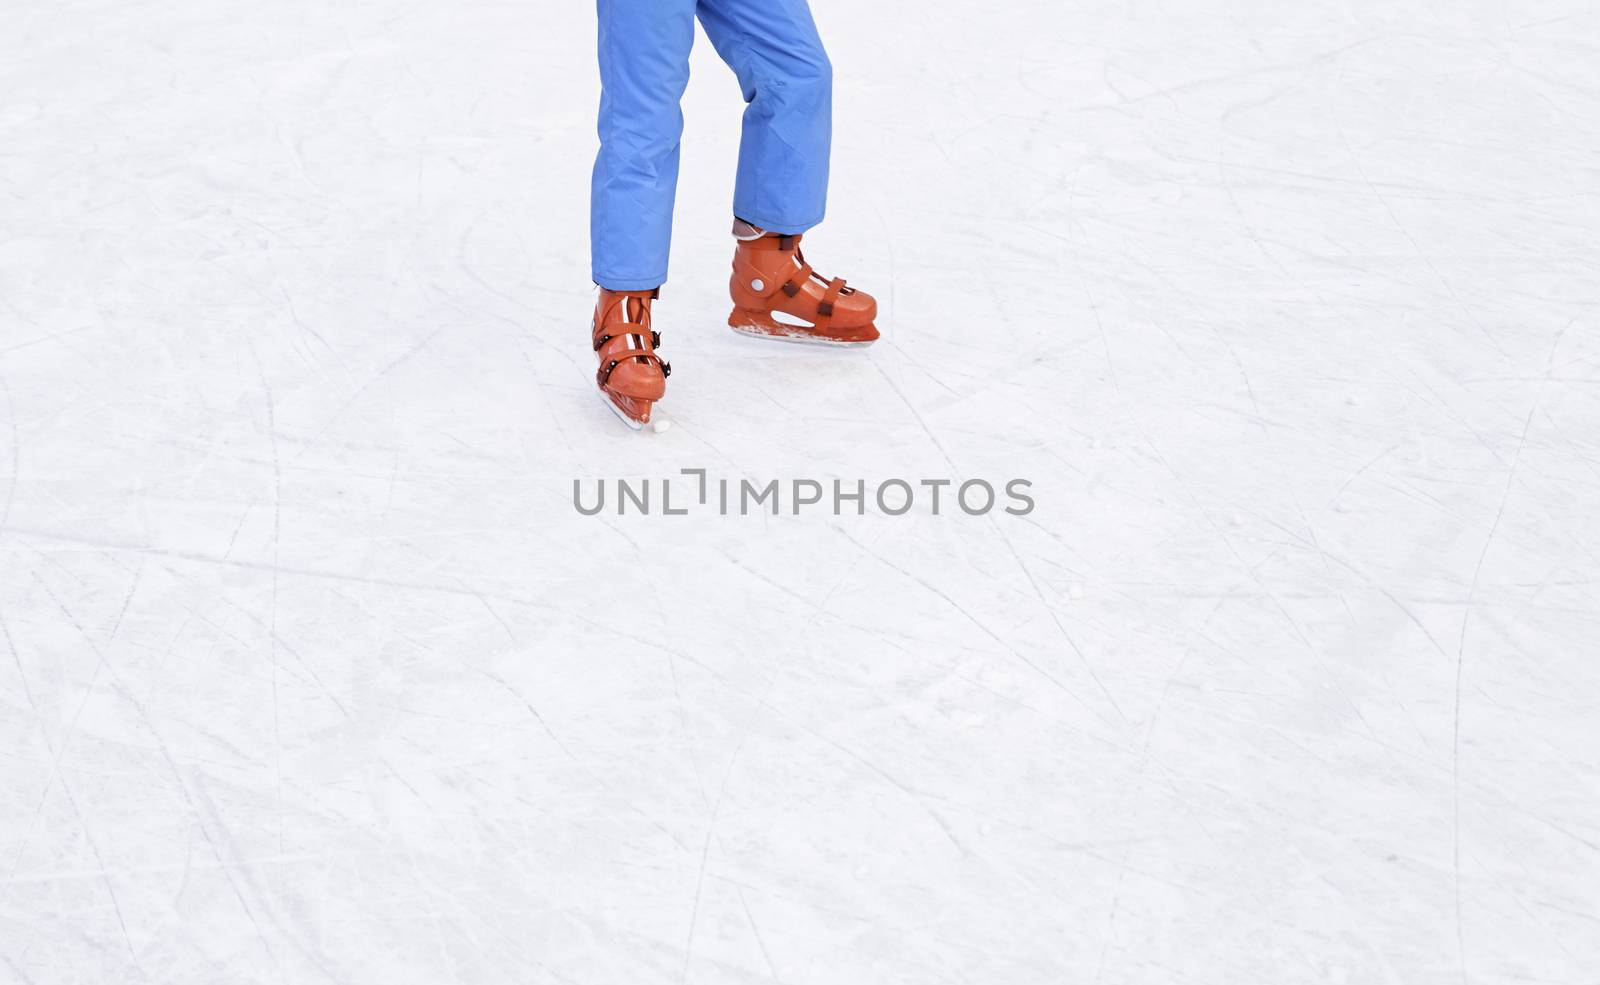 Skating on ice by esebene